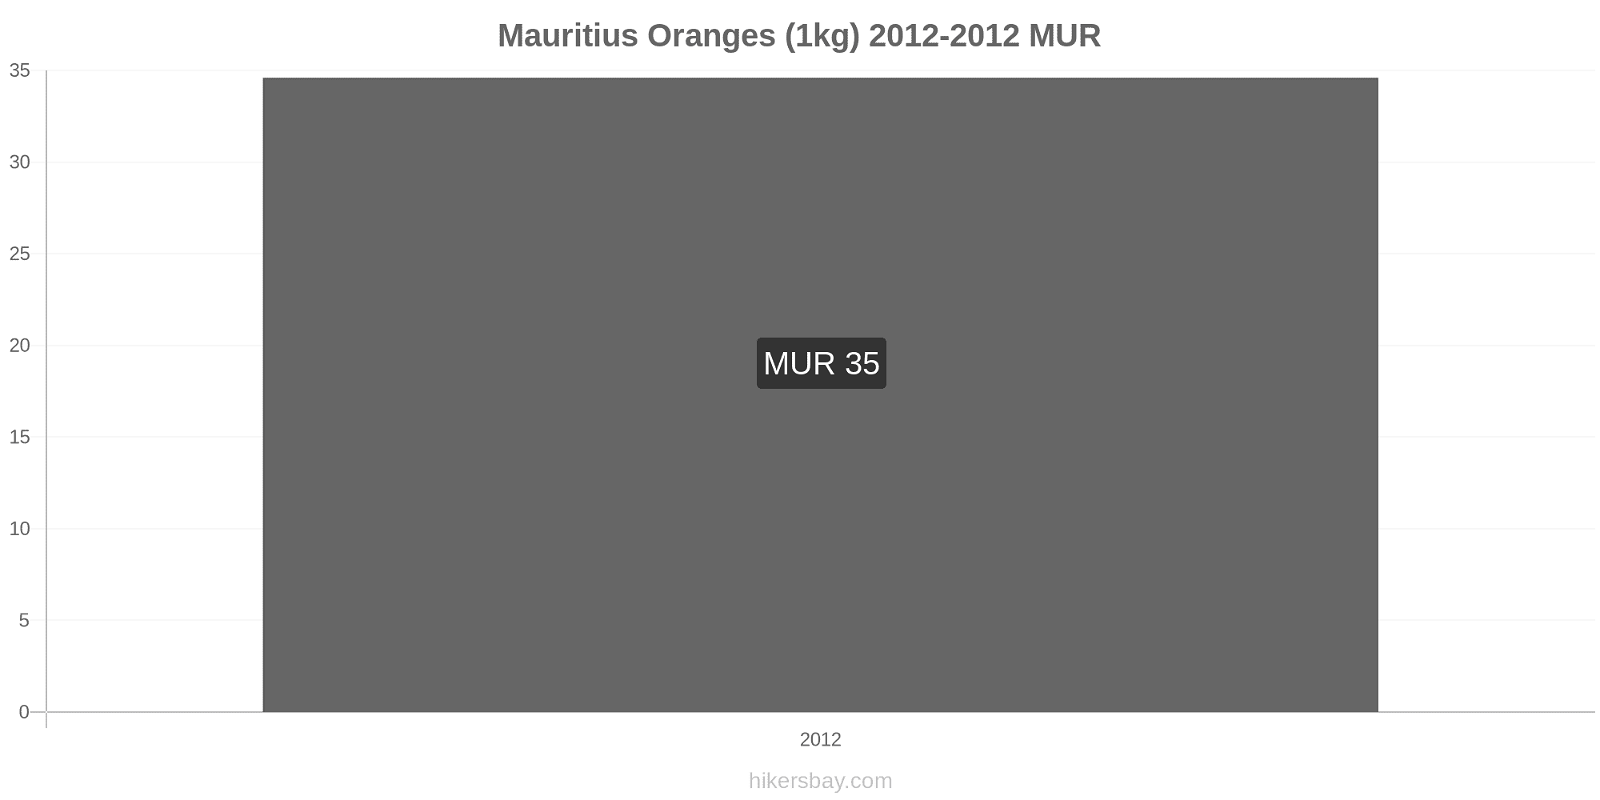 Mauritius price changes Oranges (1kg) hikersbay.com